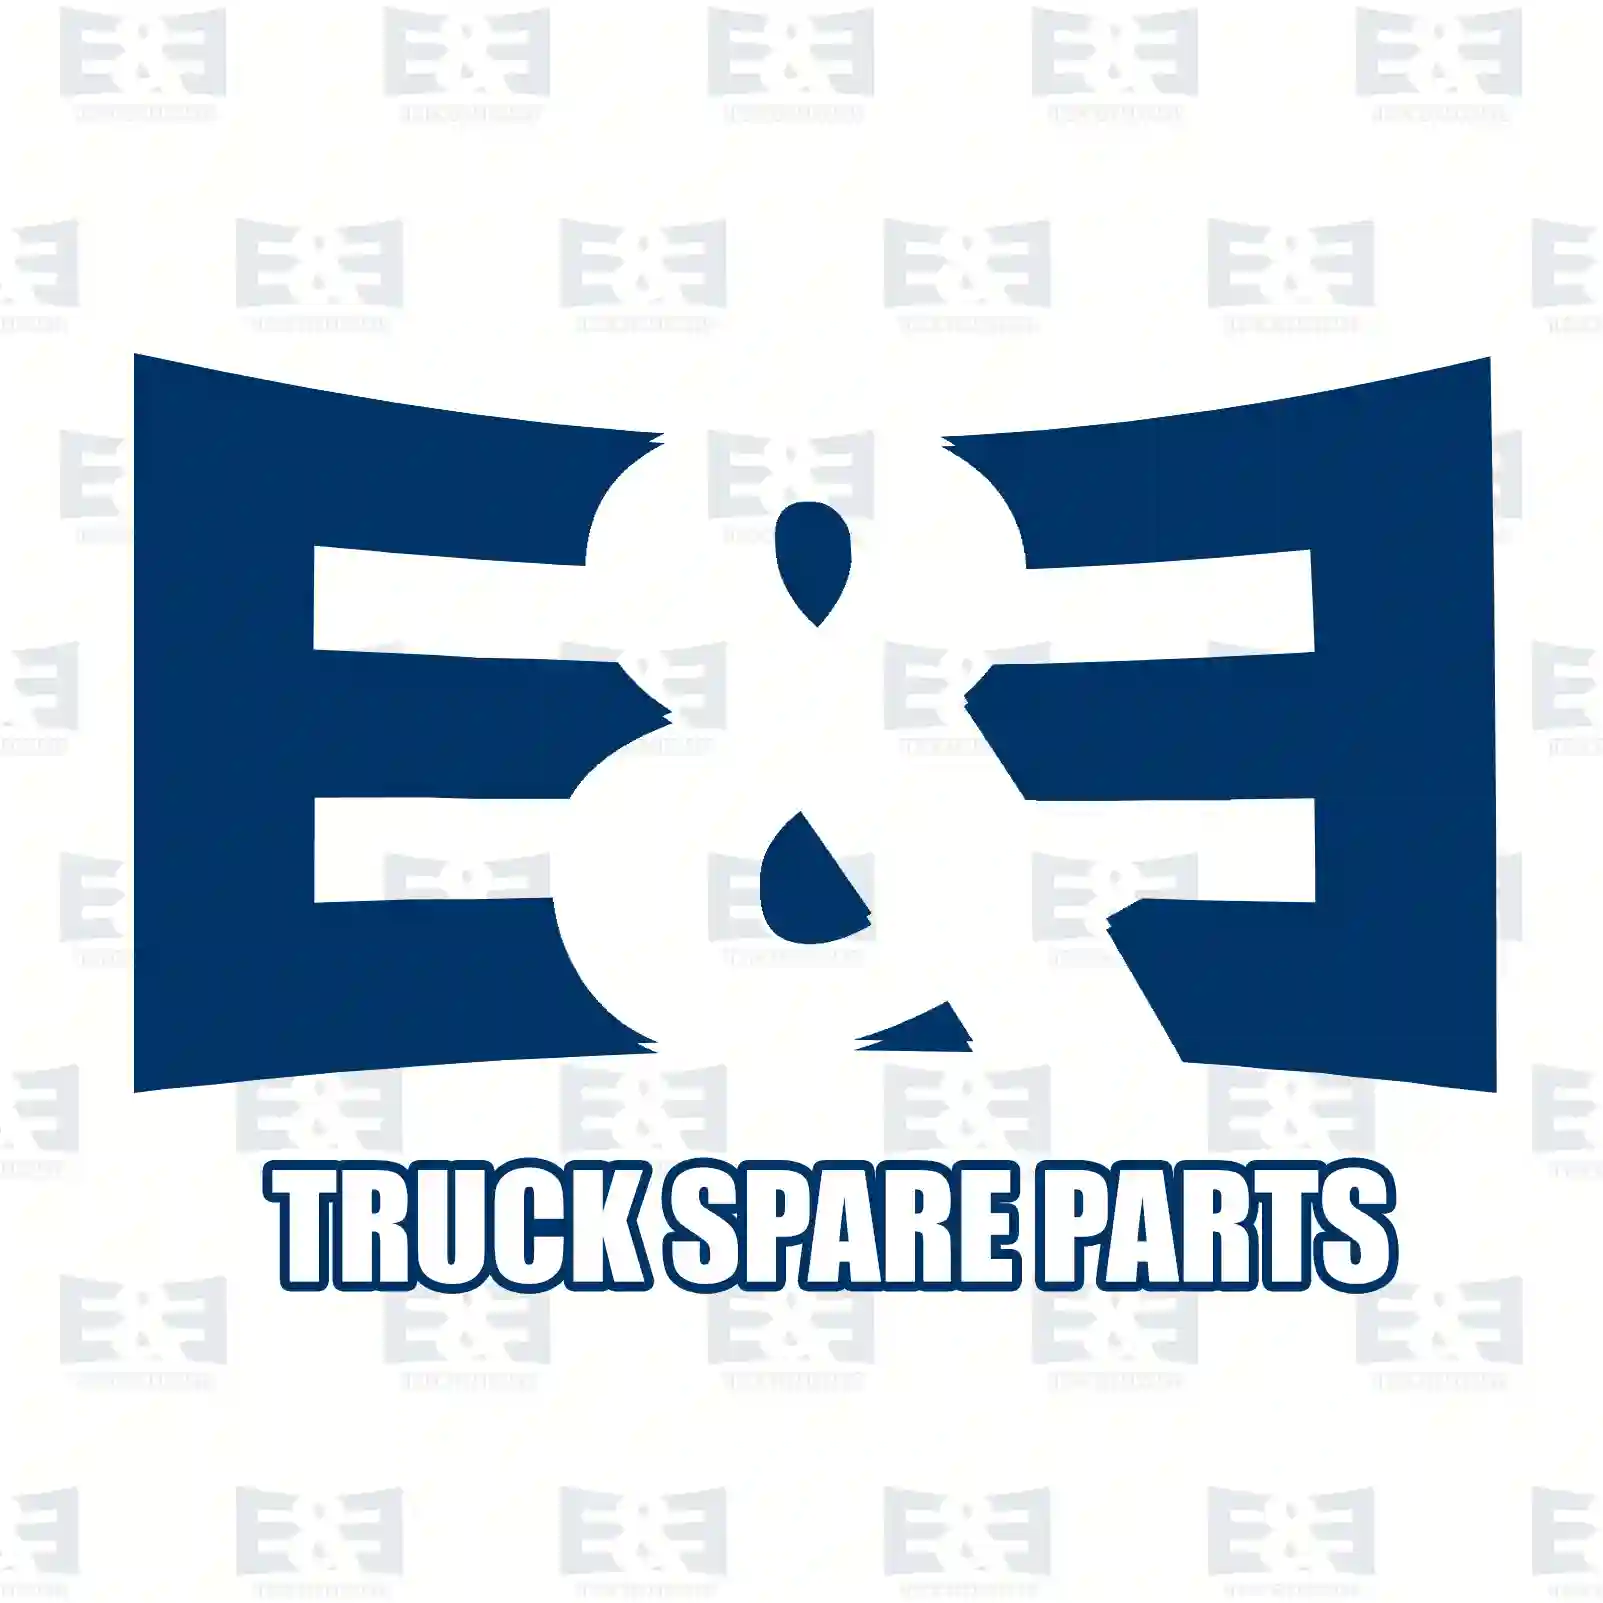 Drum brake lining kit, axle kit, 2E2296579, 81502210616, 81502210675, 81502210873, 81502216001, 81502216025, 81502216037, 81502216055, 81502216058 ||  2E2296579 E&E Truck Spare Parts | Truck Spare Parts, Auotomotive Spare Parts Drum brake lining kit, axle kit, 2E2296579, 81502210616, 81502210675, 81502210873, 81502216001, 81502216025, 81502216037, 81502216055, 81502216058 ||  2E2296579 E&E Truck Spare Parts | Truck Spare Parts, Auotomotive Spare Parts